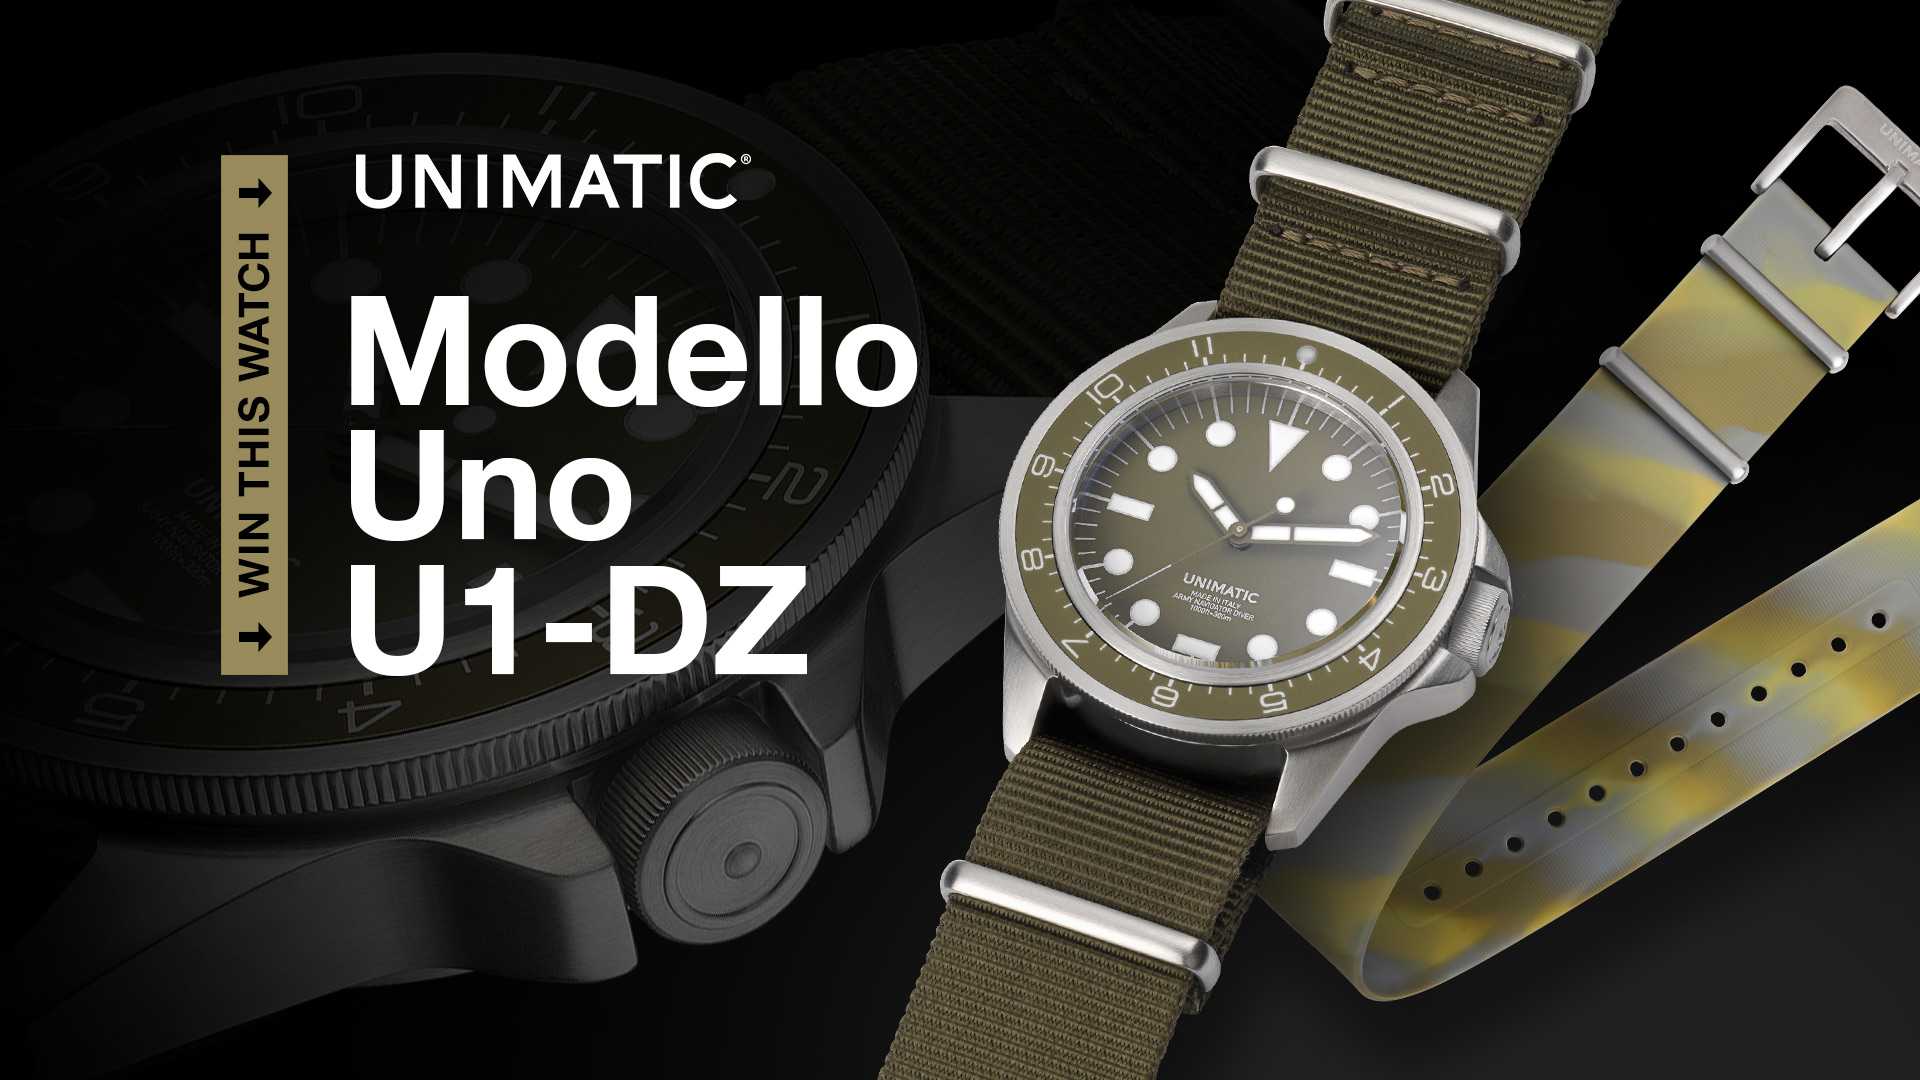 WATCH GIVEAWAY: Unimatic Modello Uno U1-DZ Limited Edition Watch Giveaways 